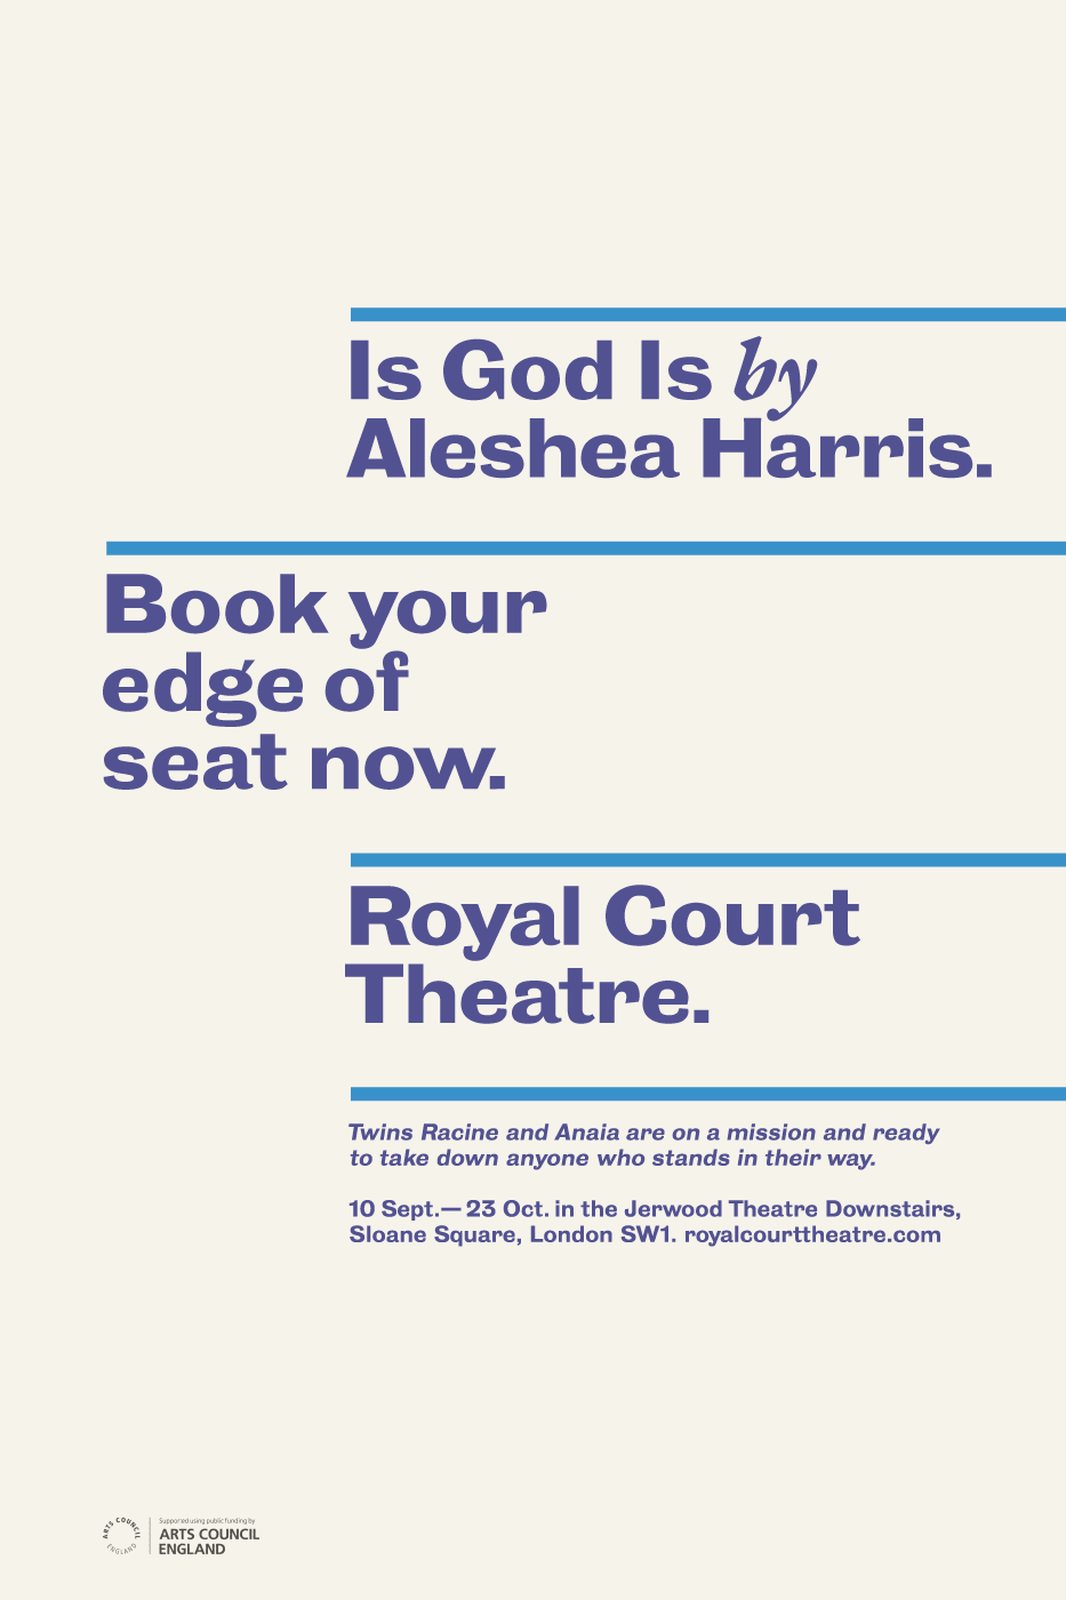 paul_belford_ltd_royal_court_theatre_is_god_is.png